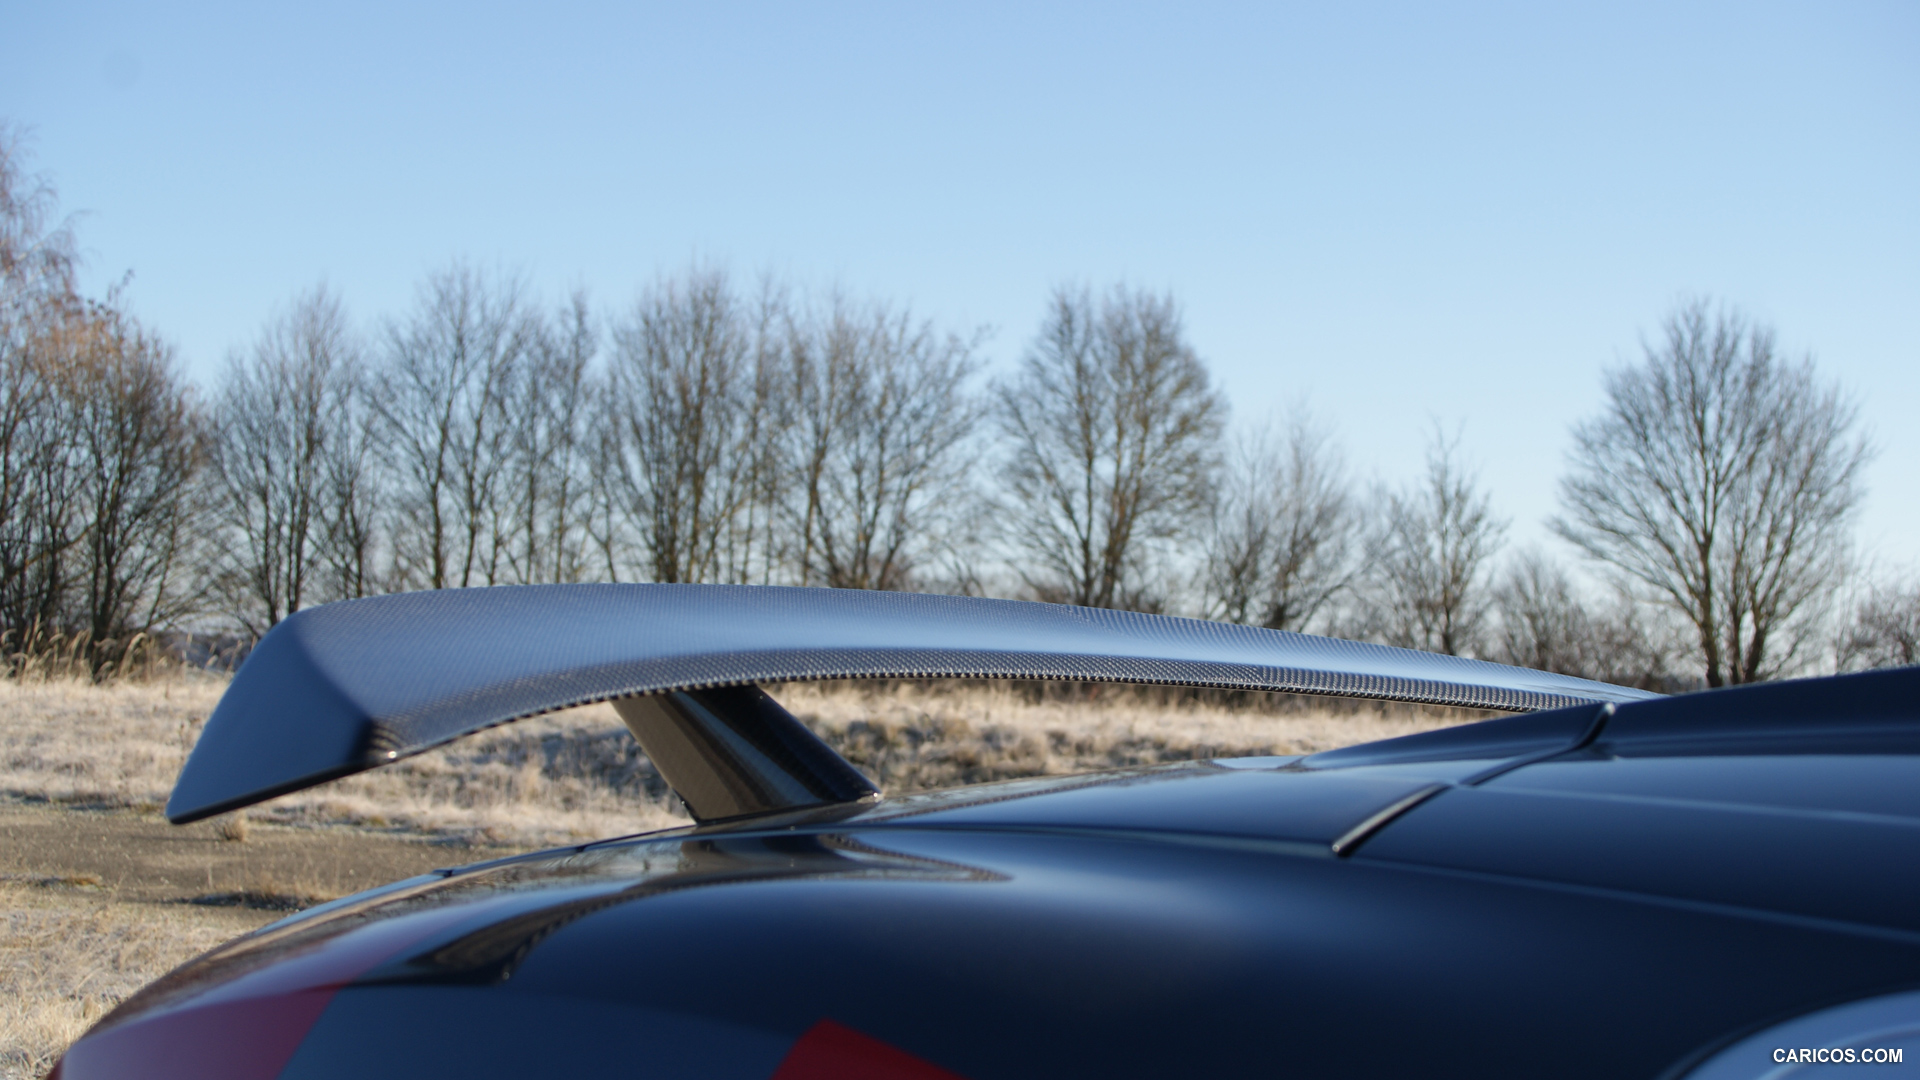 MTM Audi R8 V10 (2013) Spyder - Spoiler, #8 of 21